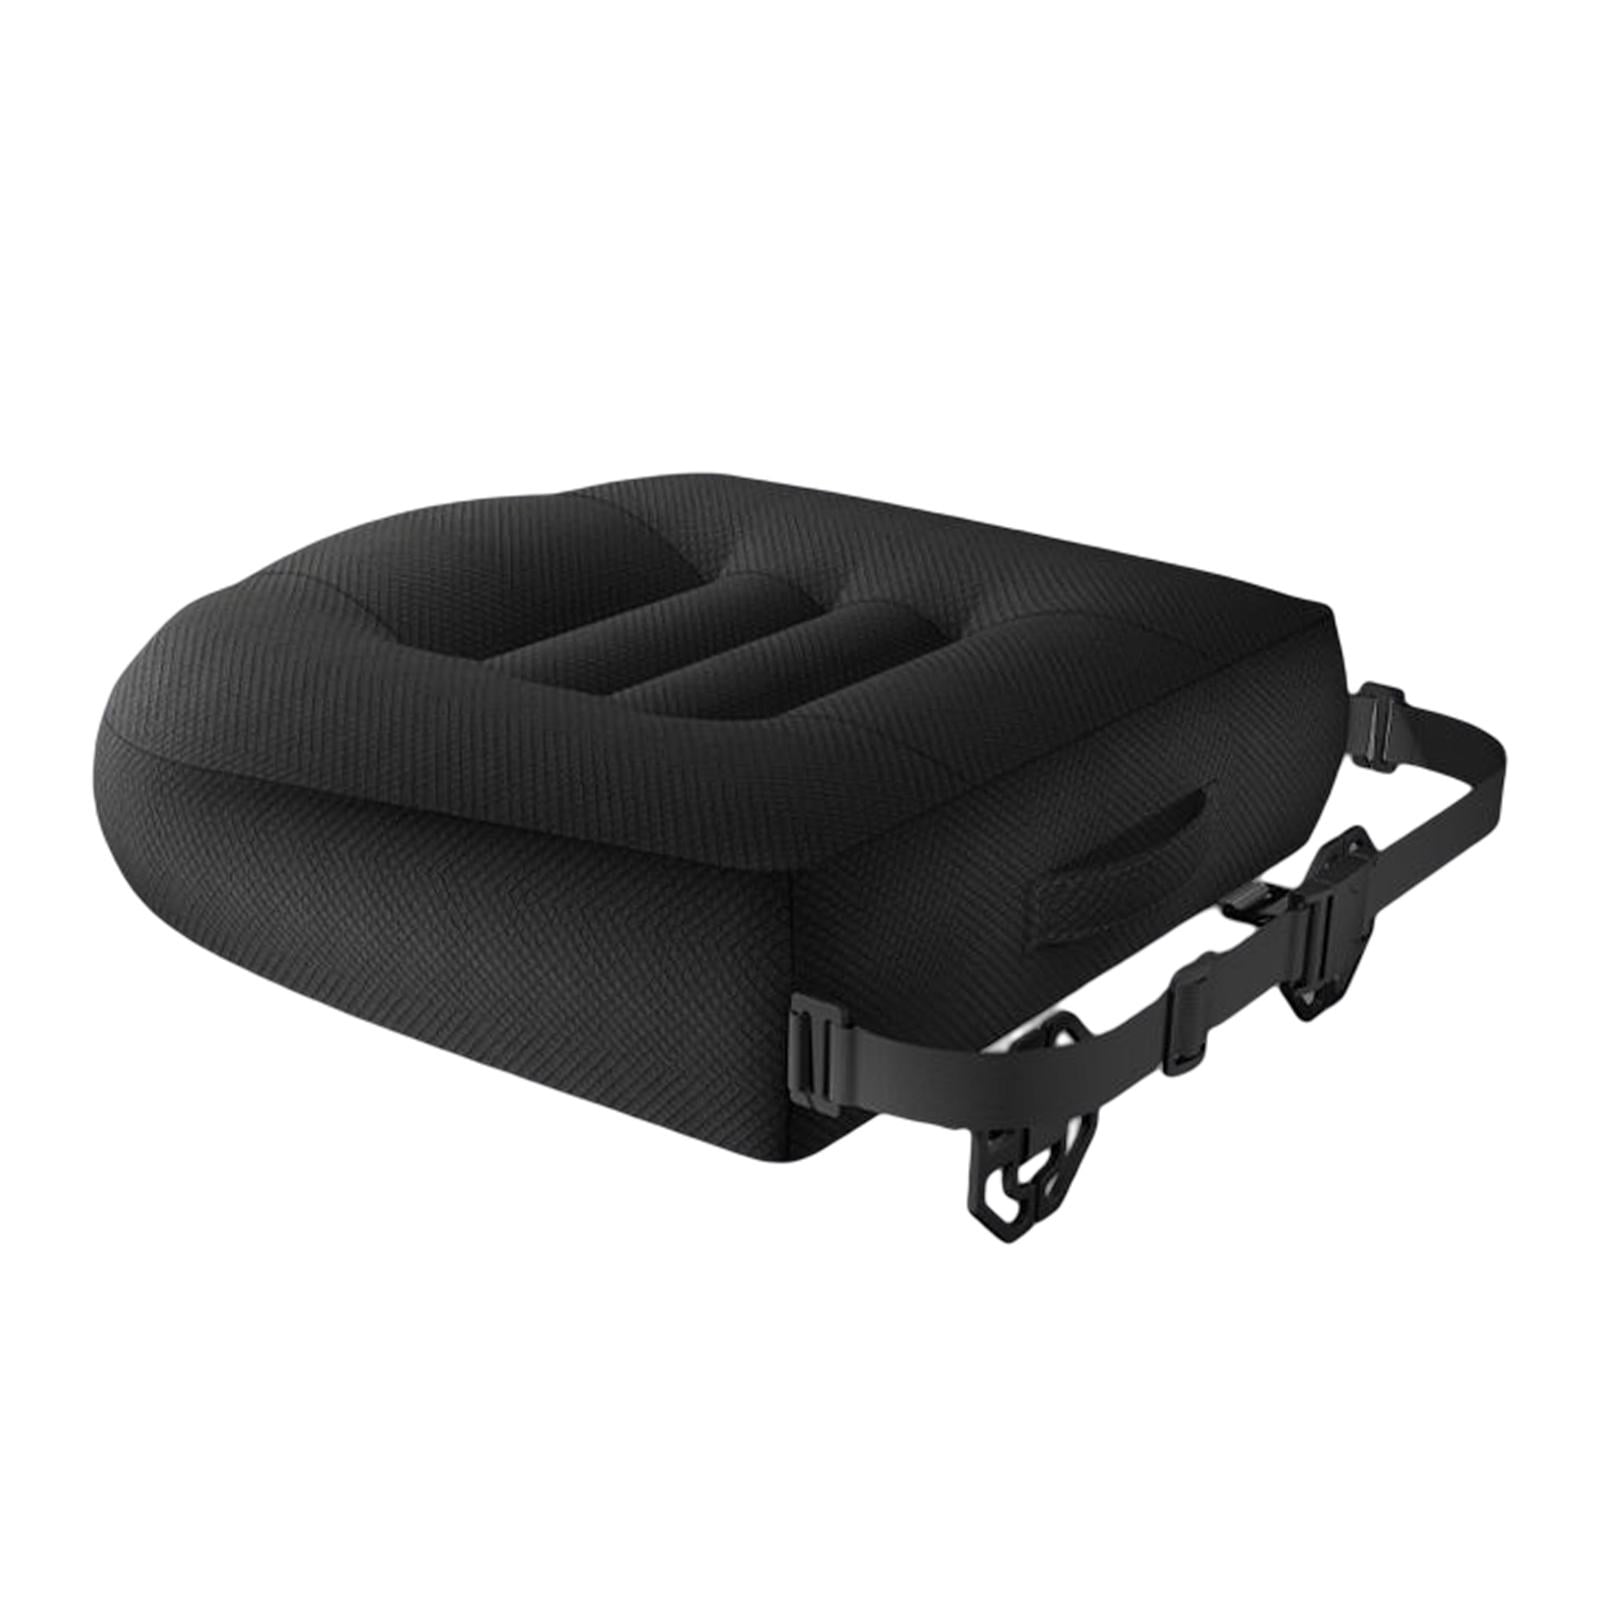 Proflight Booster Seat / Flight Cushion